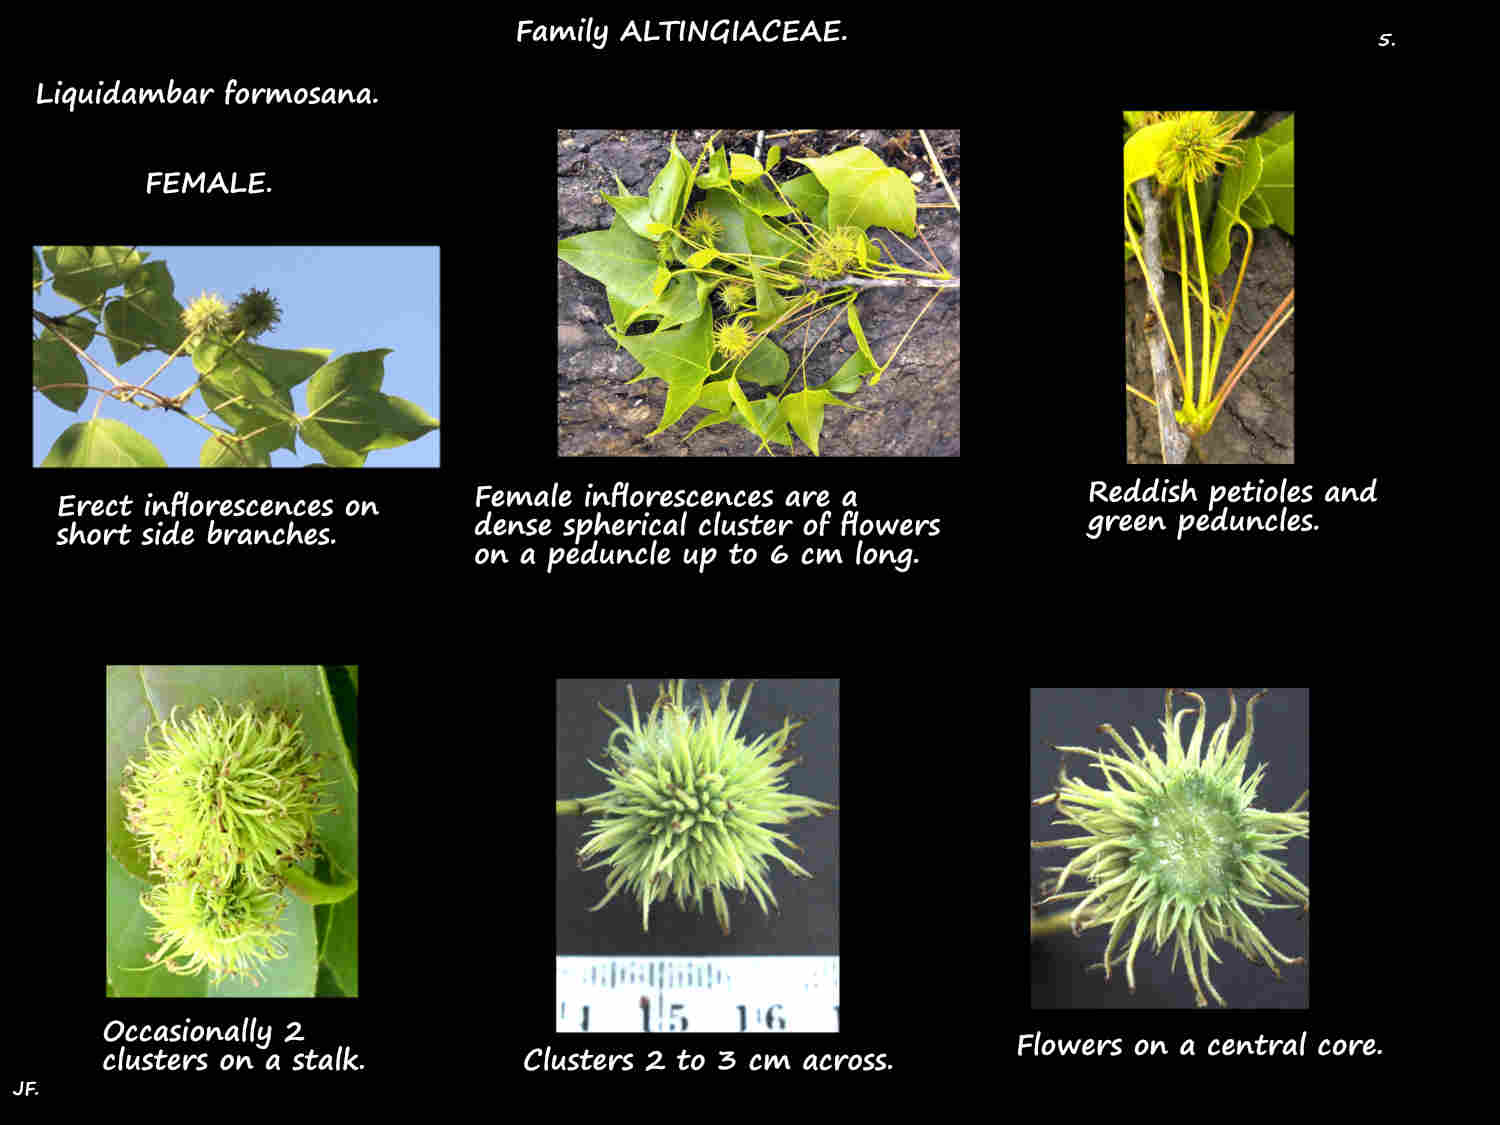 5 Female Liquidambar formosana inflorescences